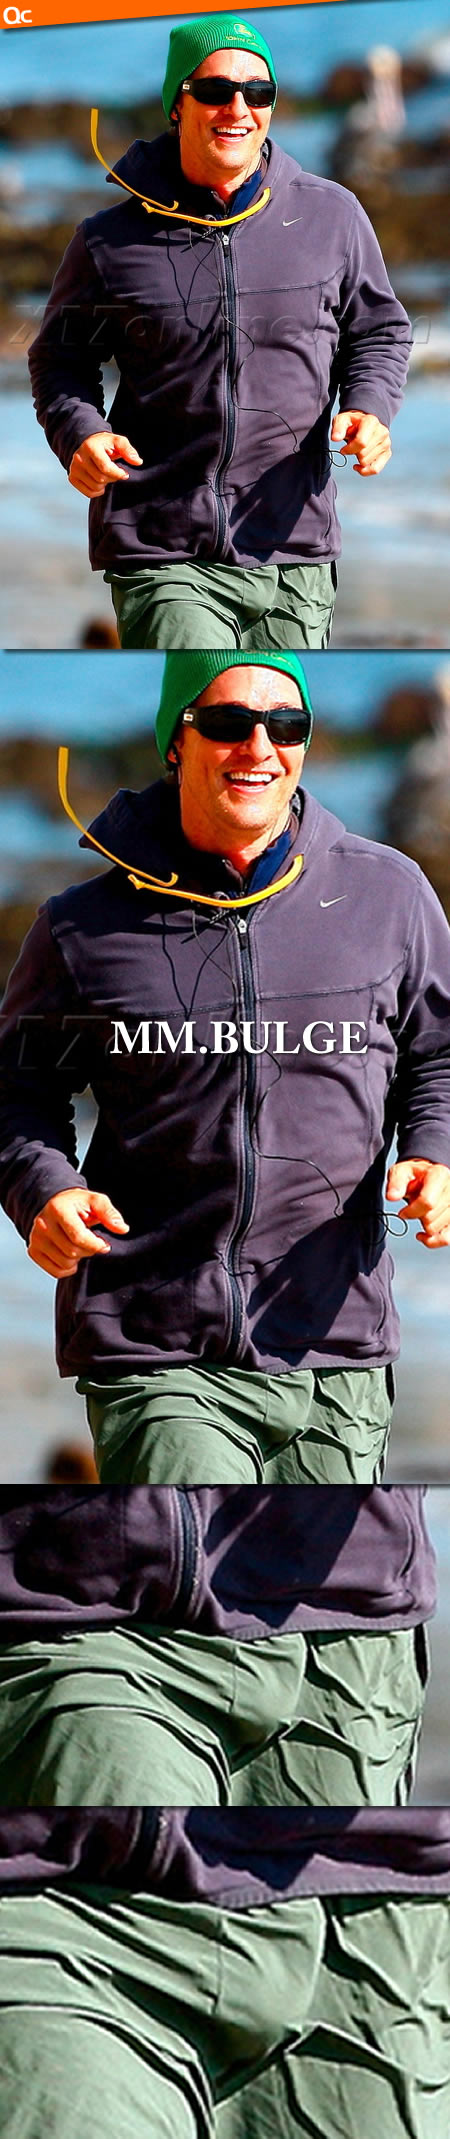 Matthew McConaughey Jogging Bulge